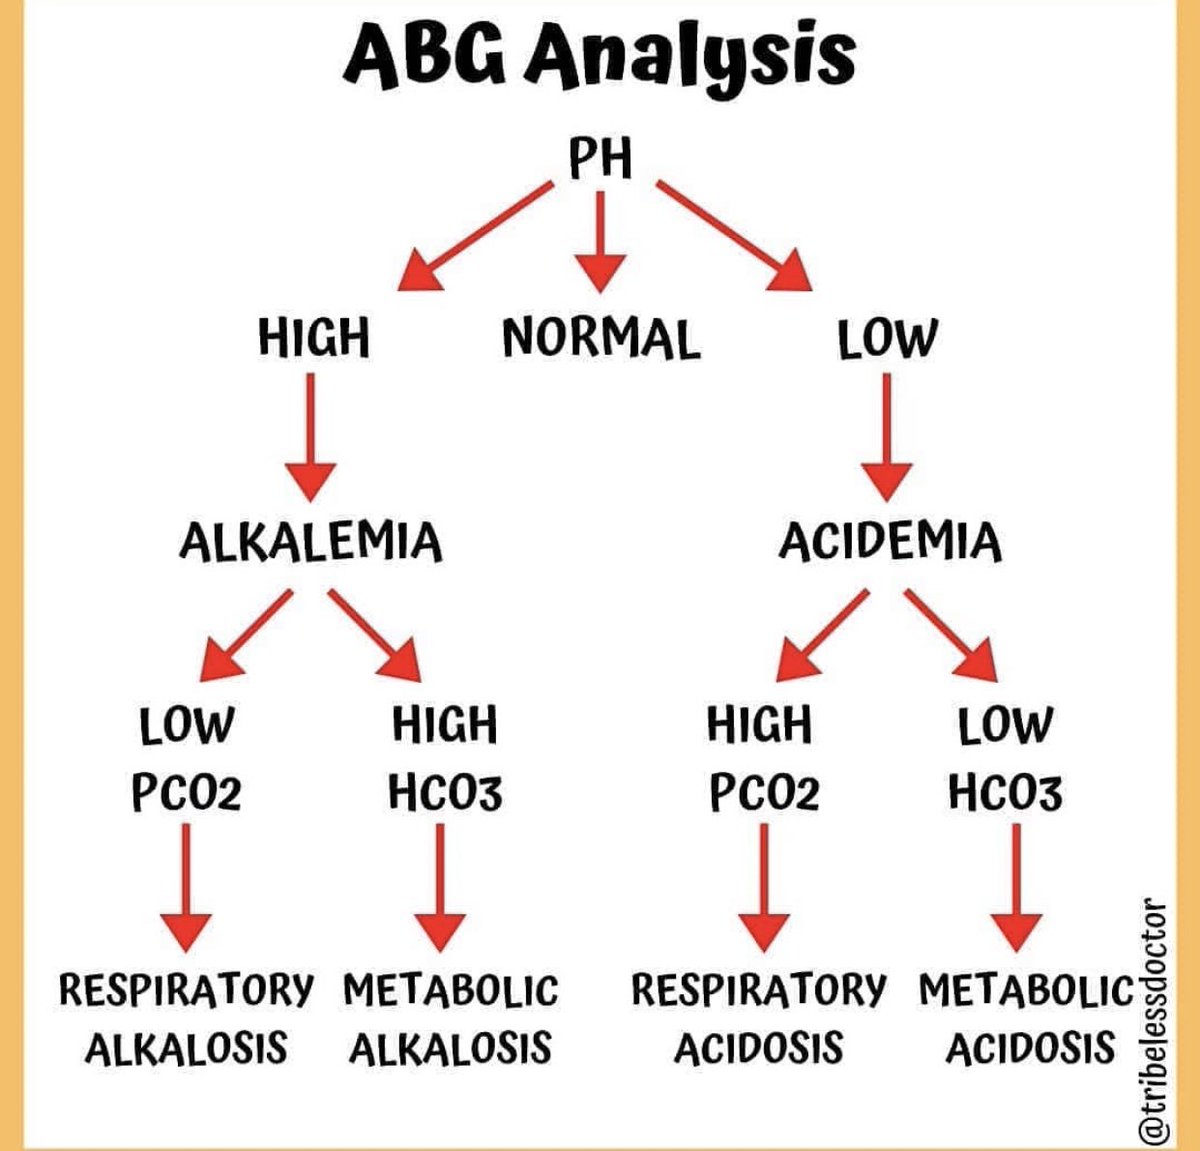 #ABG. #arterialbloodgases